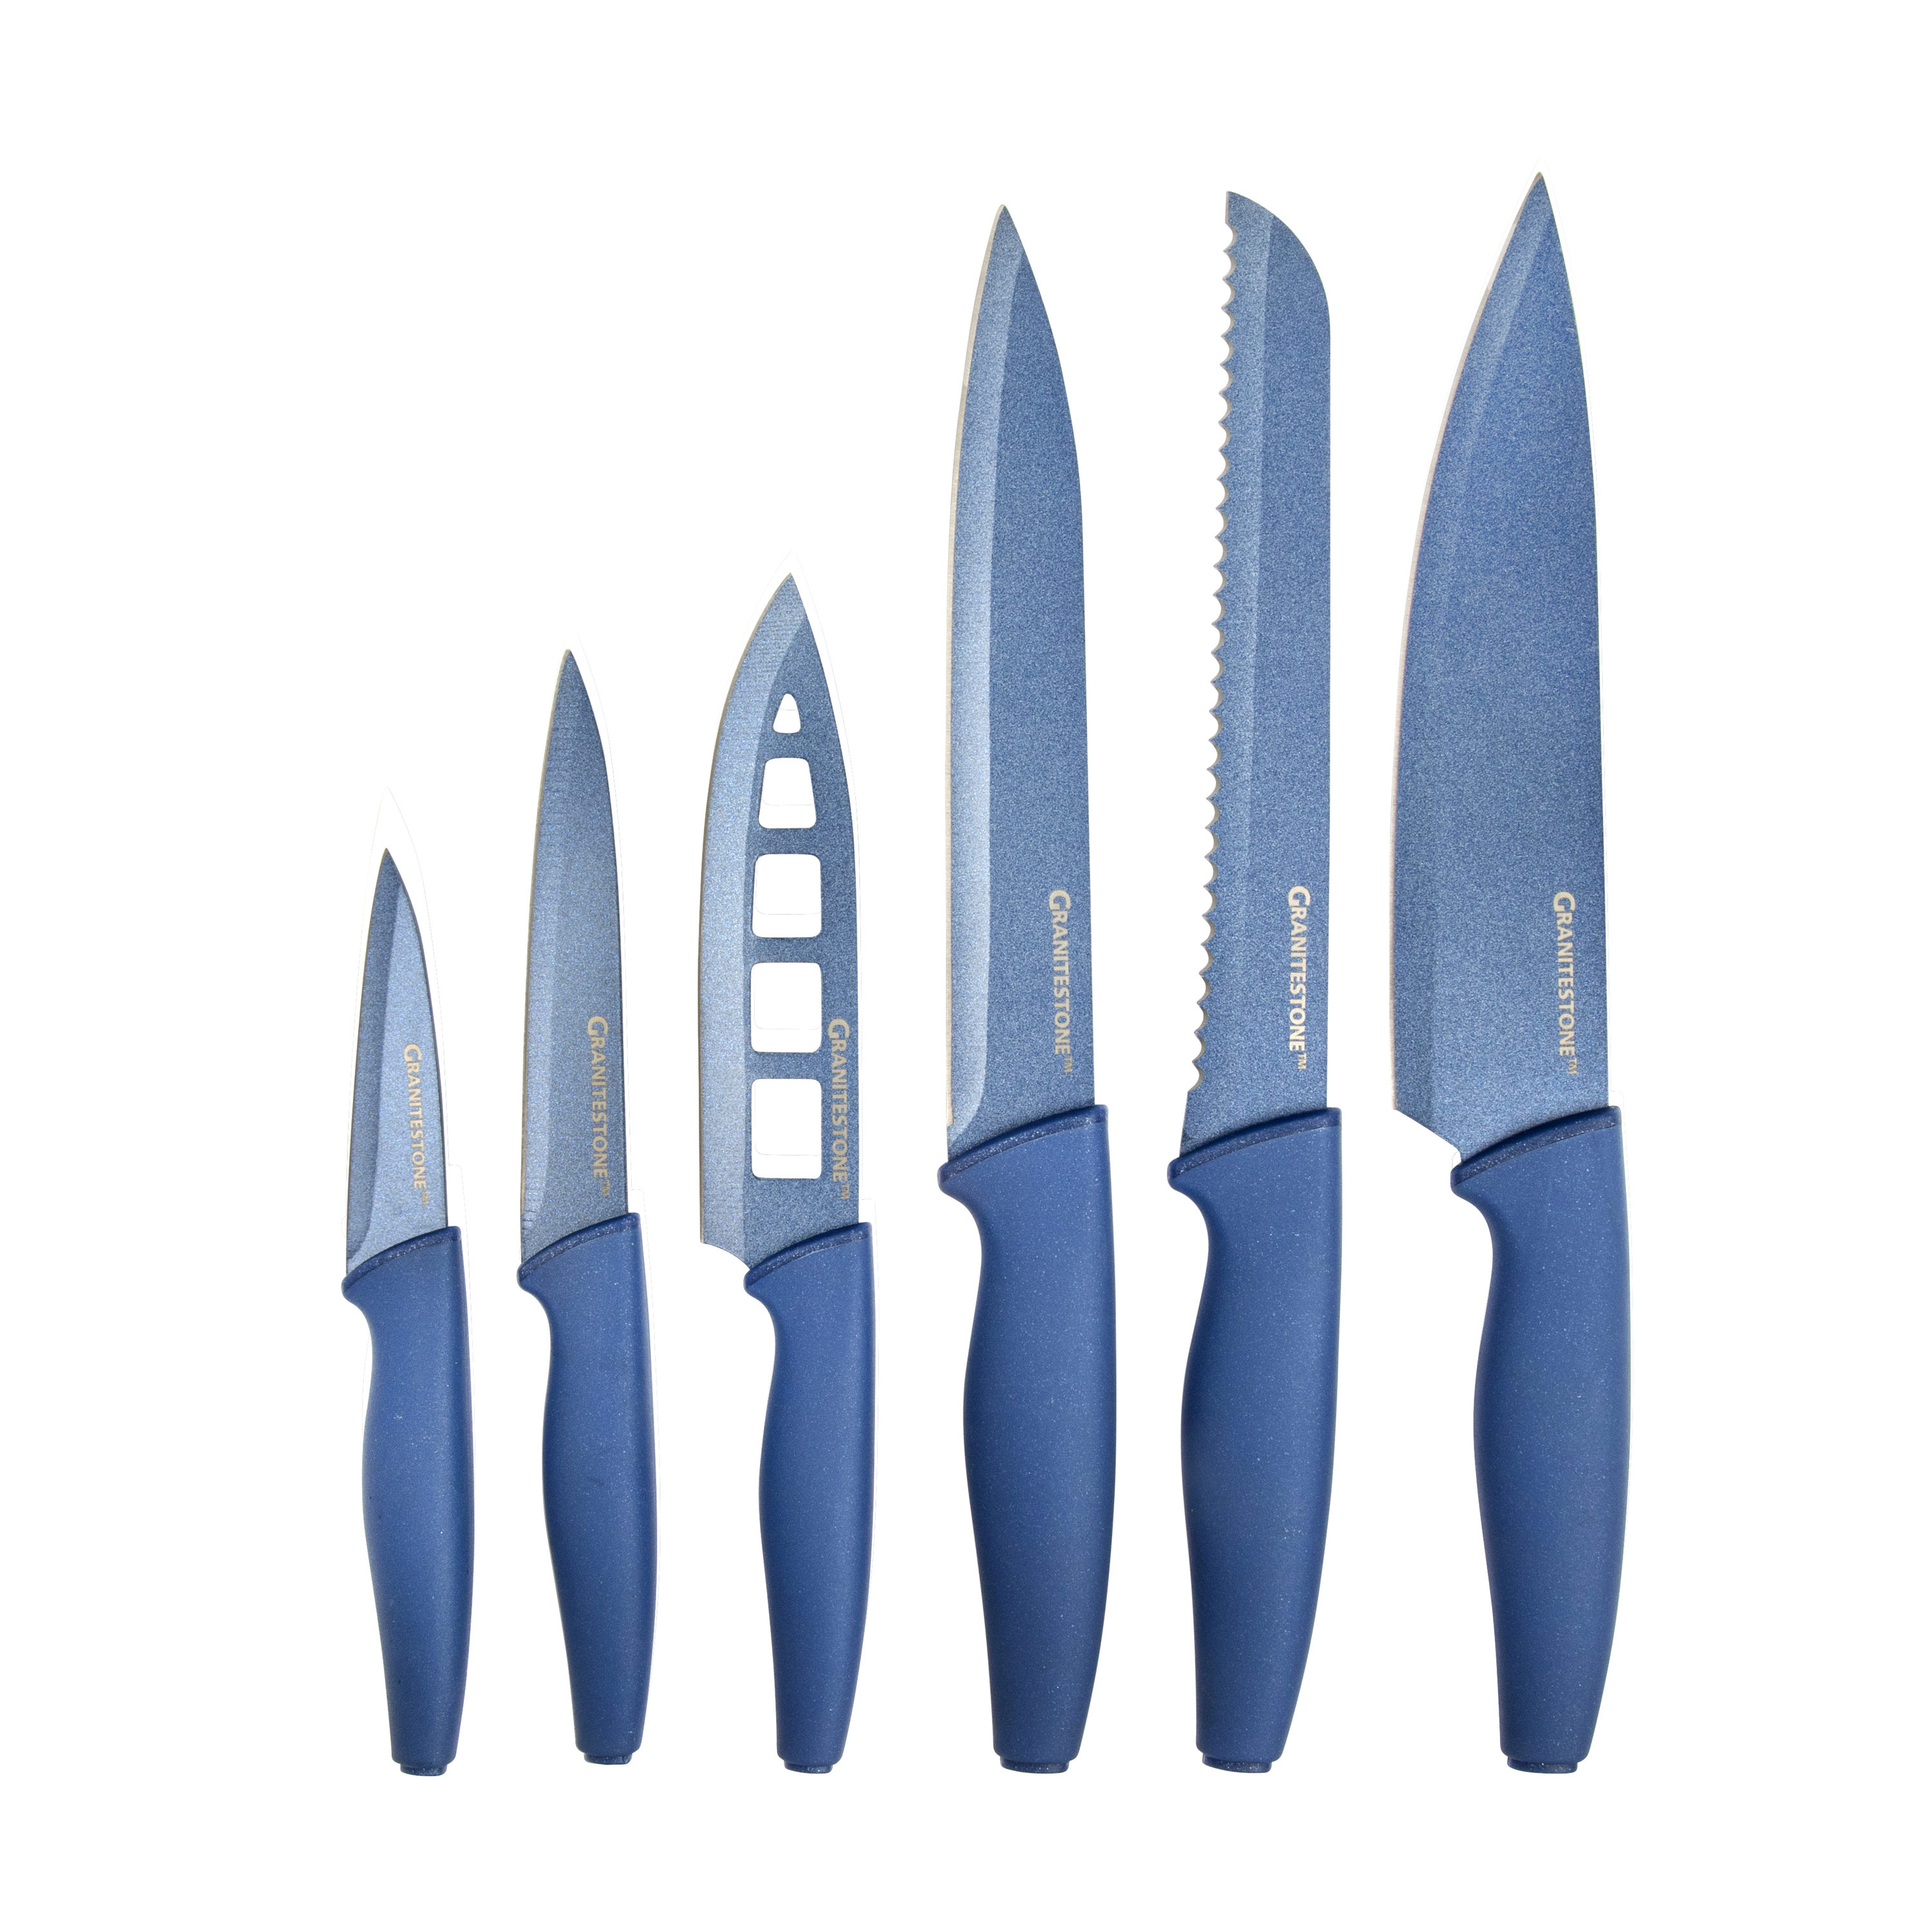 Blue Diamond Sharp Stone Nonstick Knife Set, 3-Piece